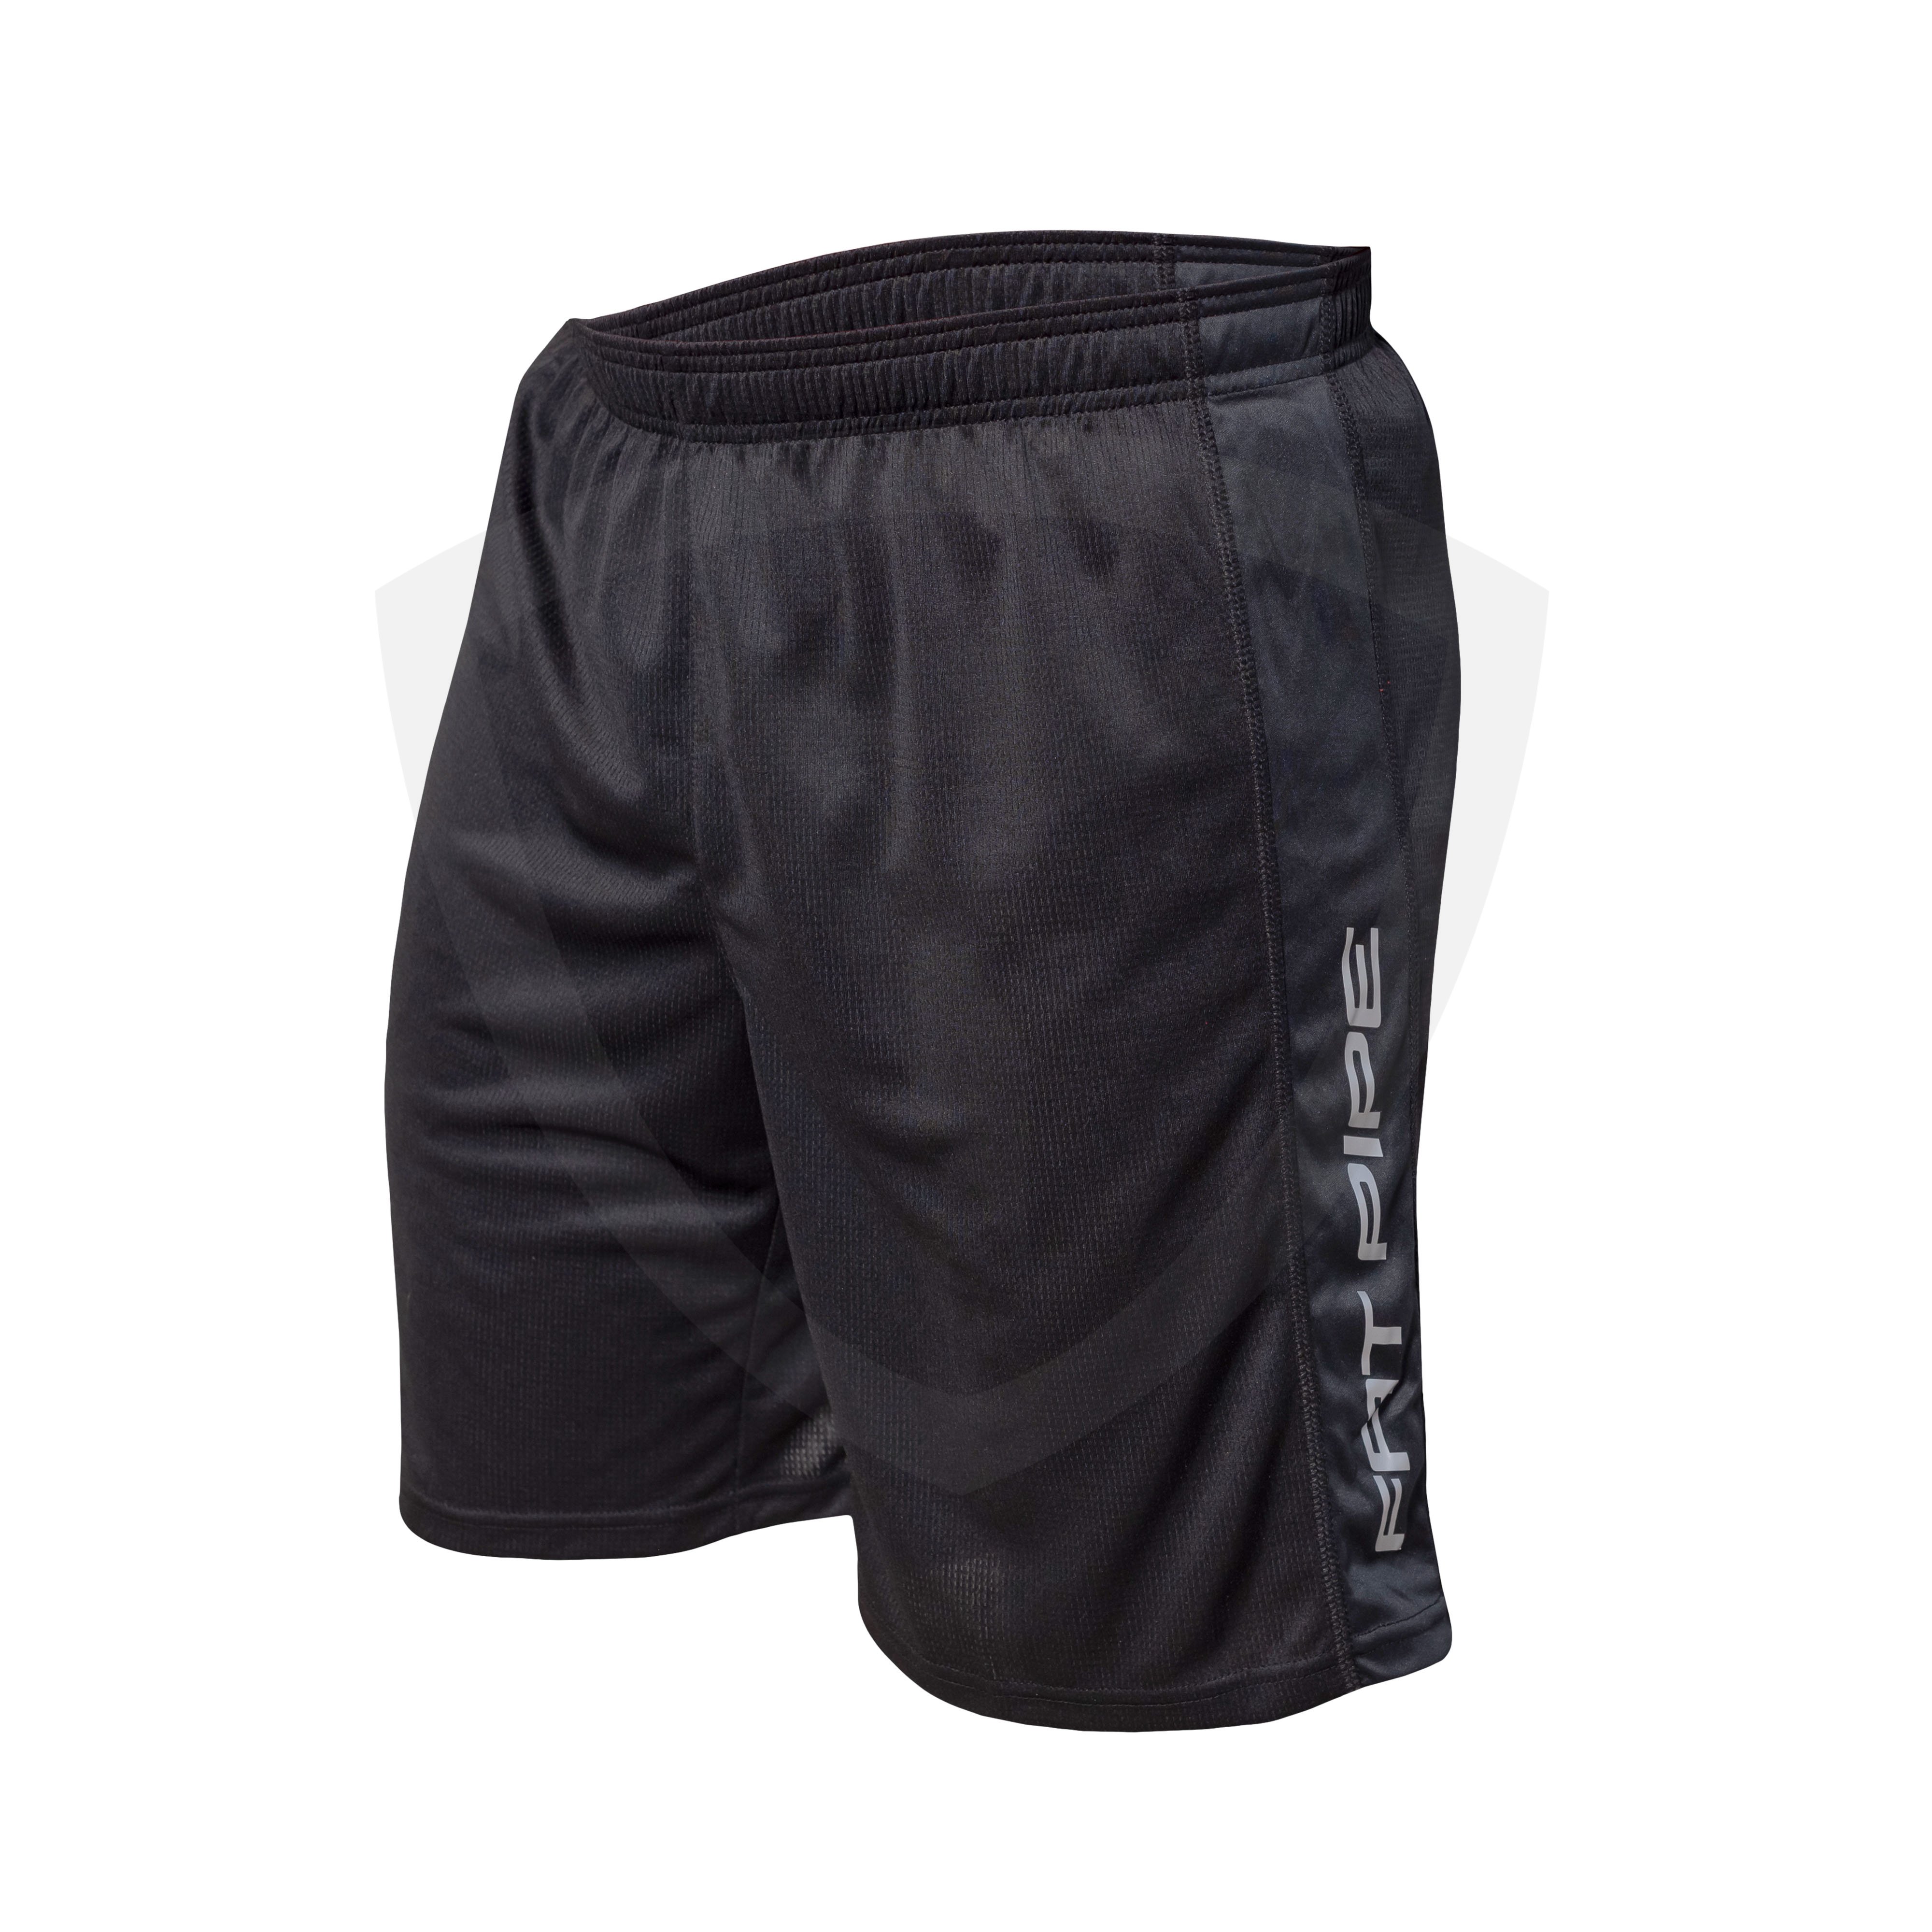 Fatpipe Dolon Training Shorts XL černá